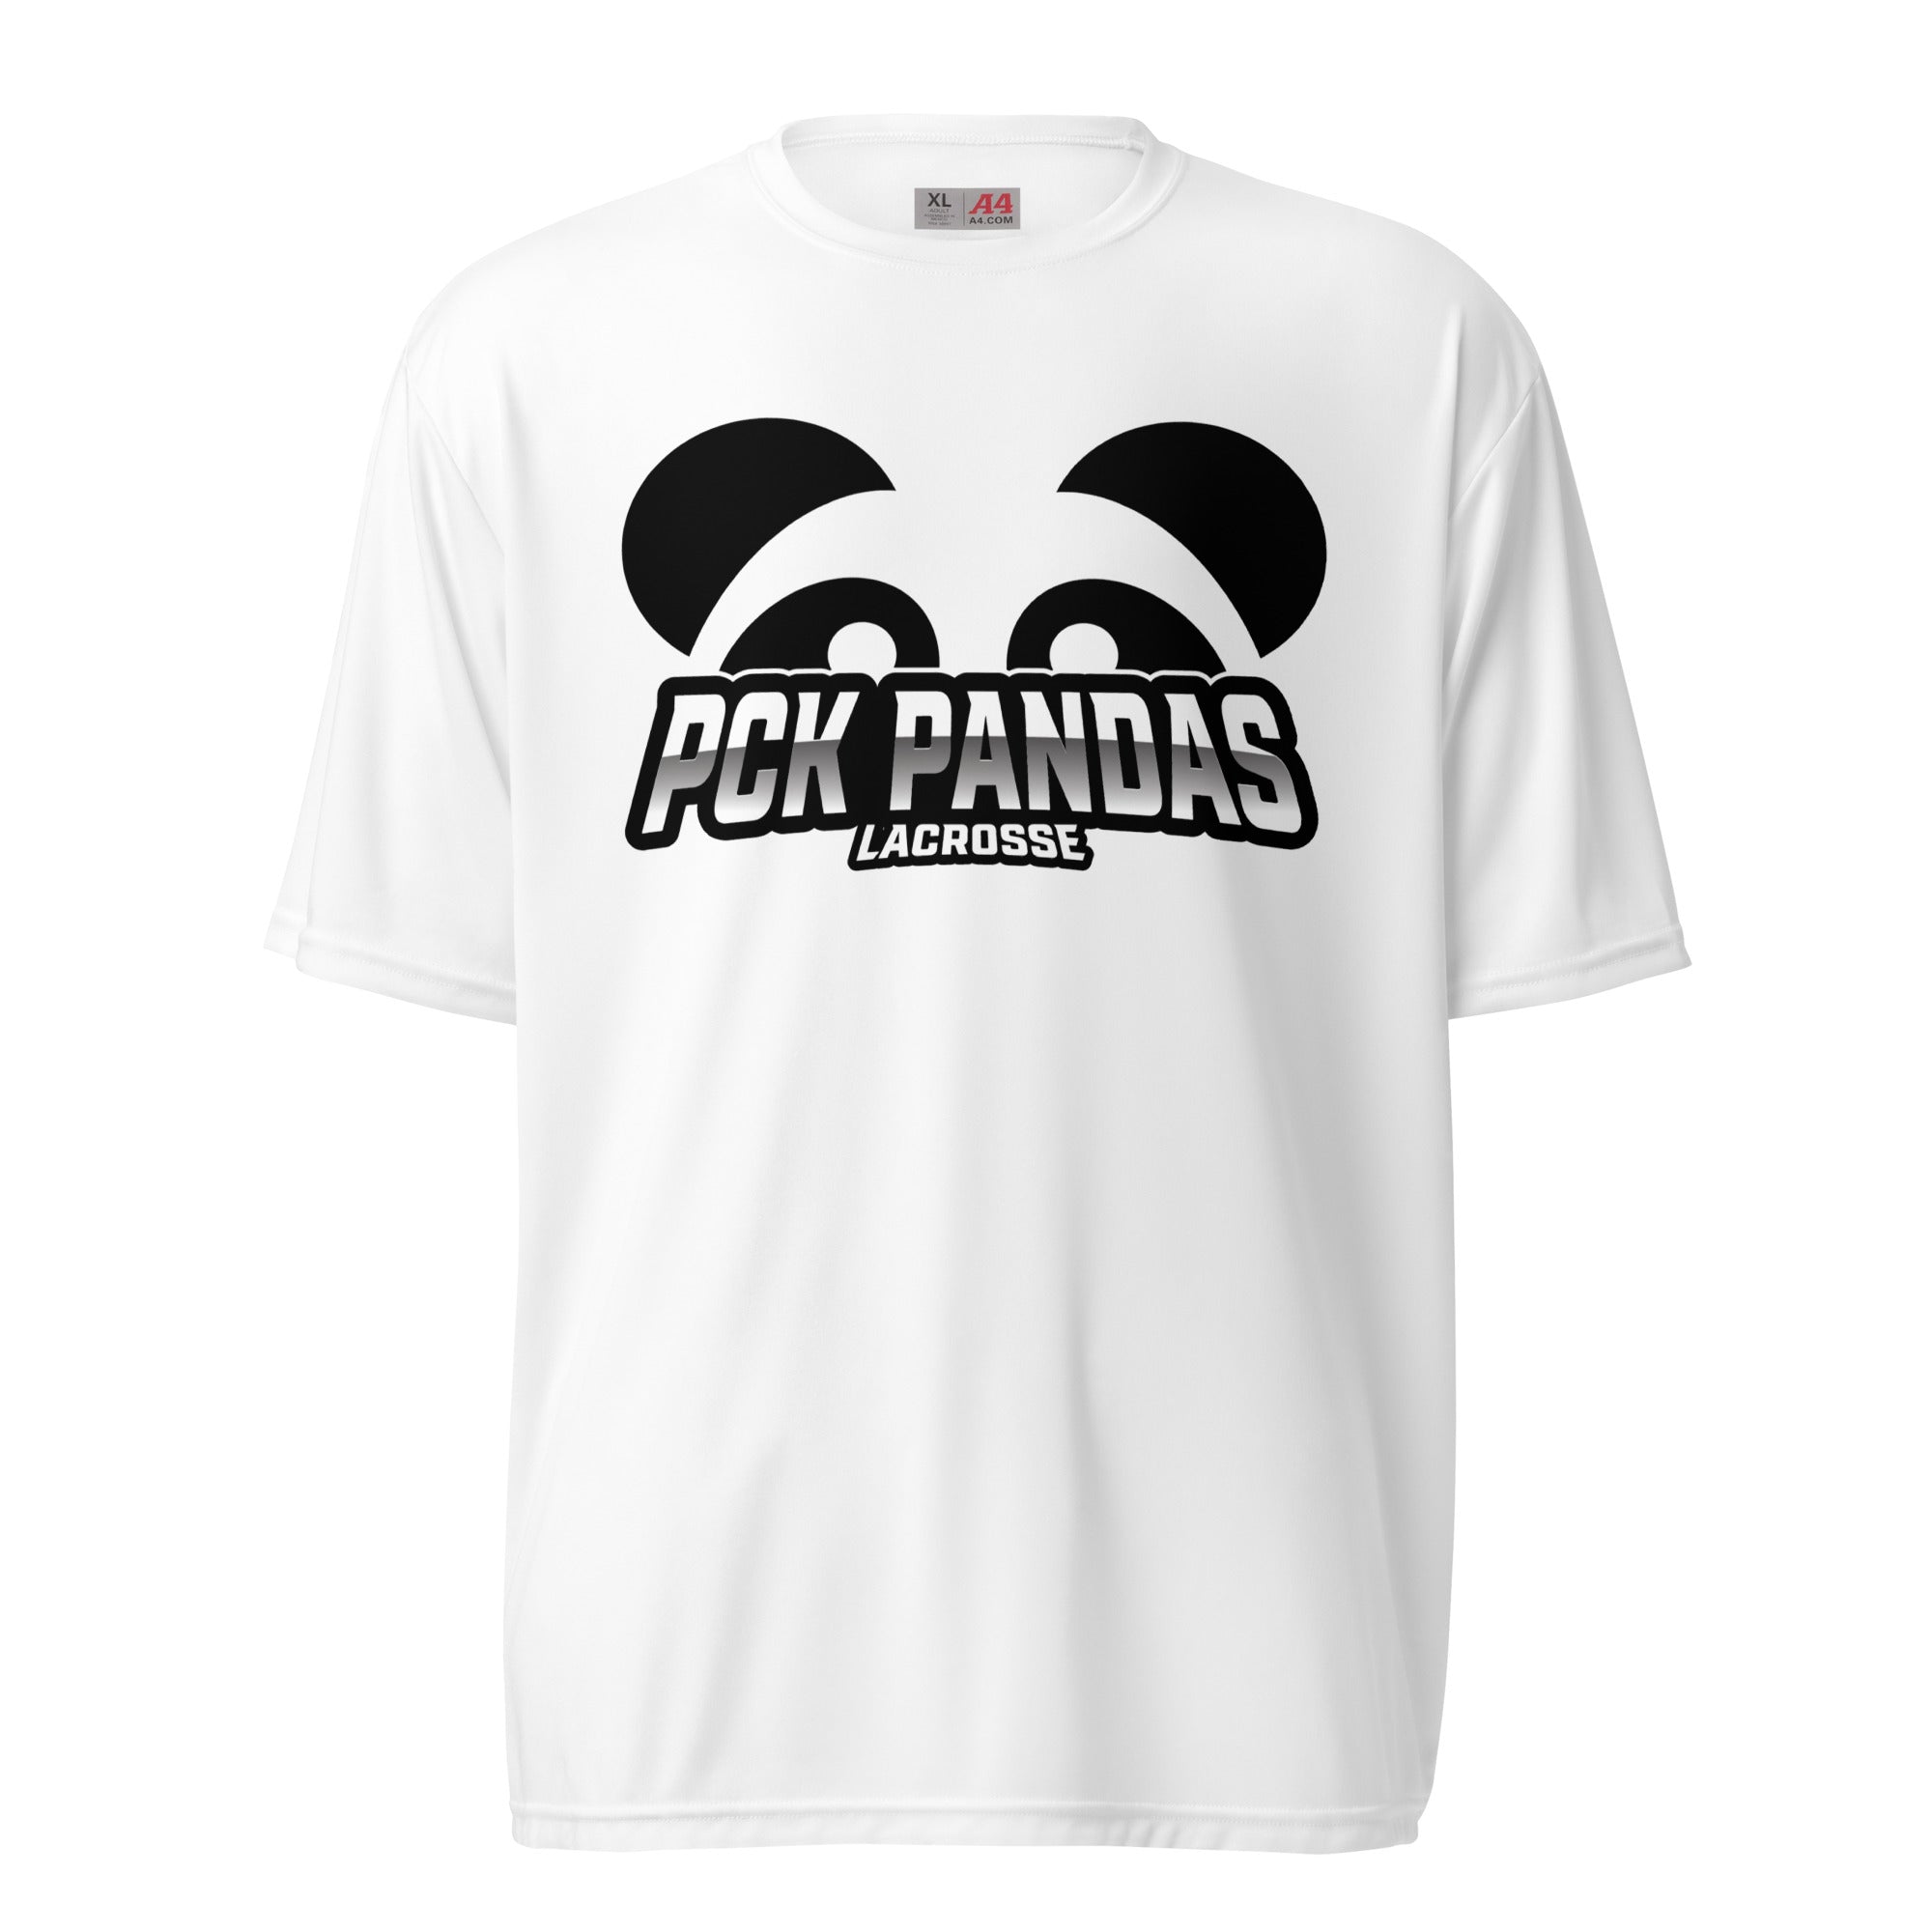 PCK Pandas Unisex Performance T-shirt